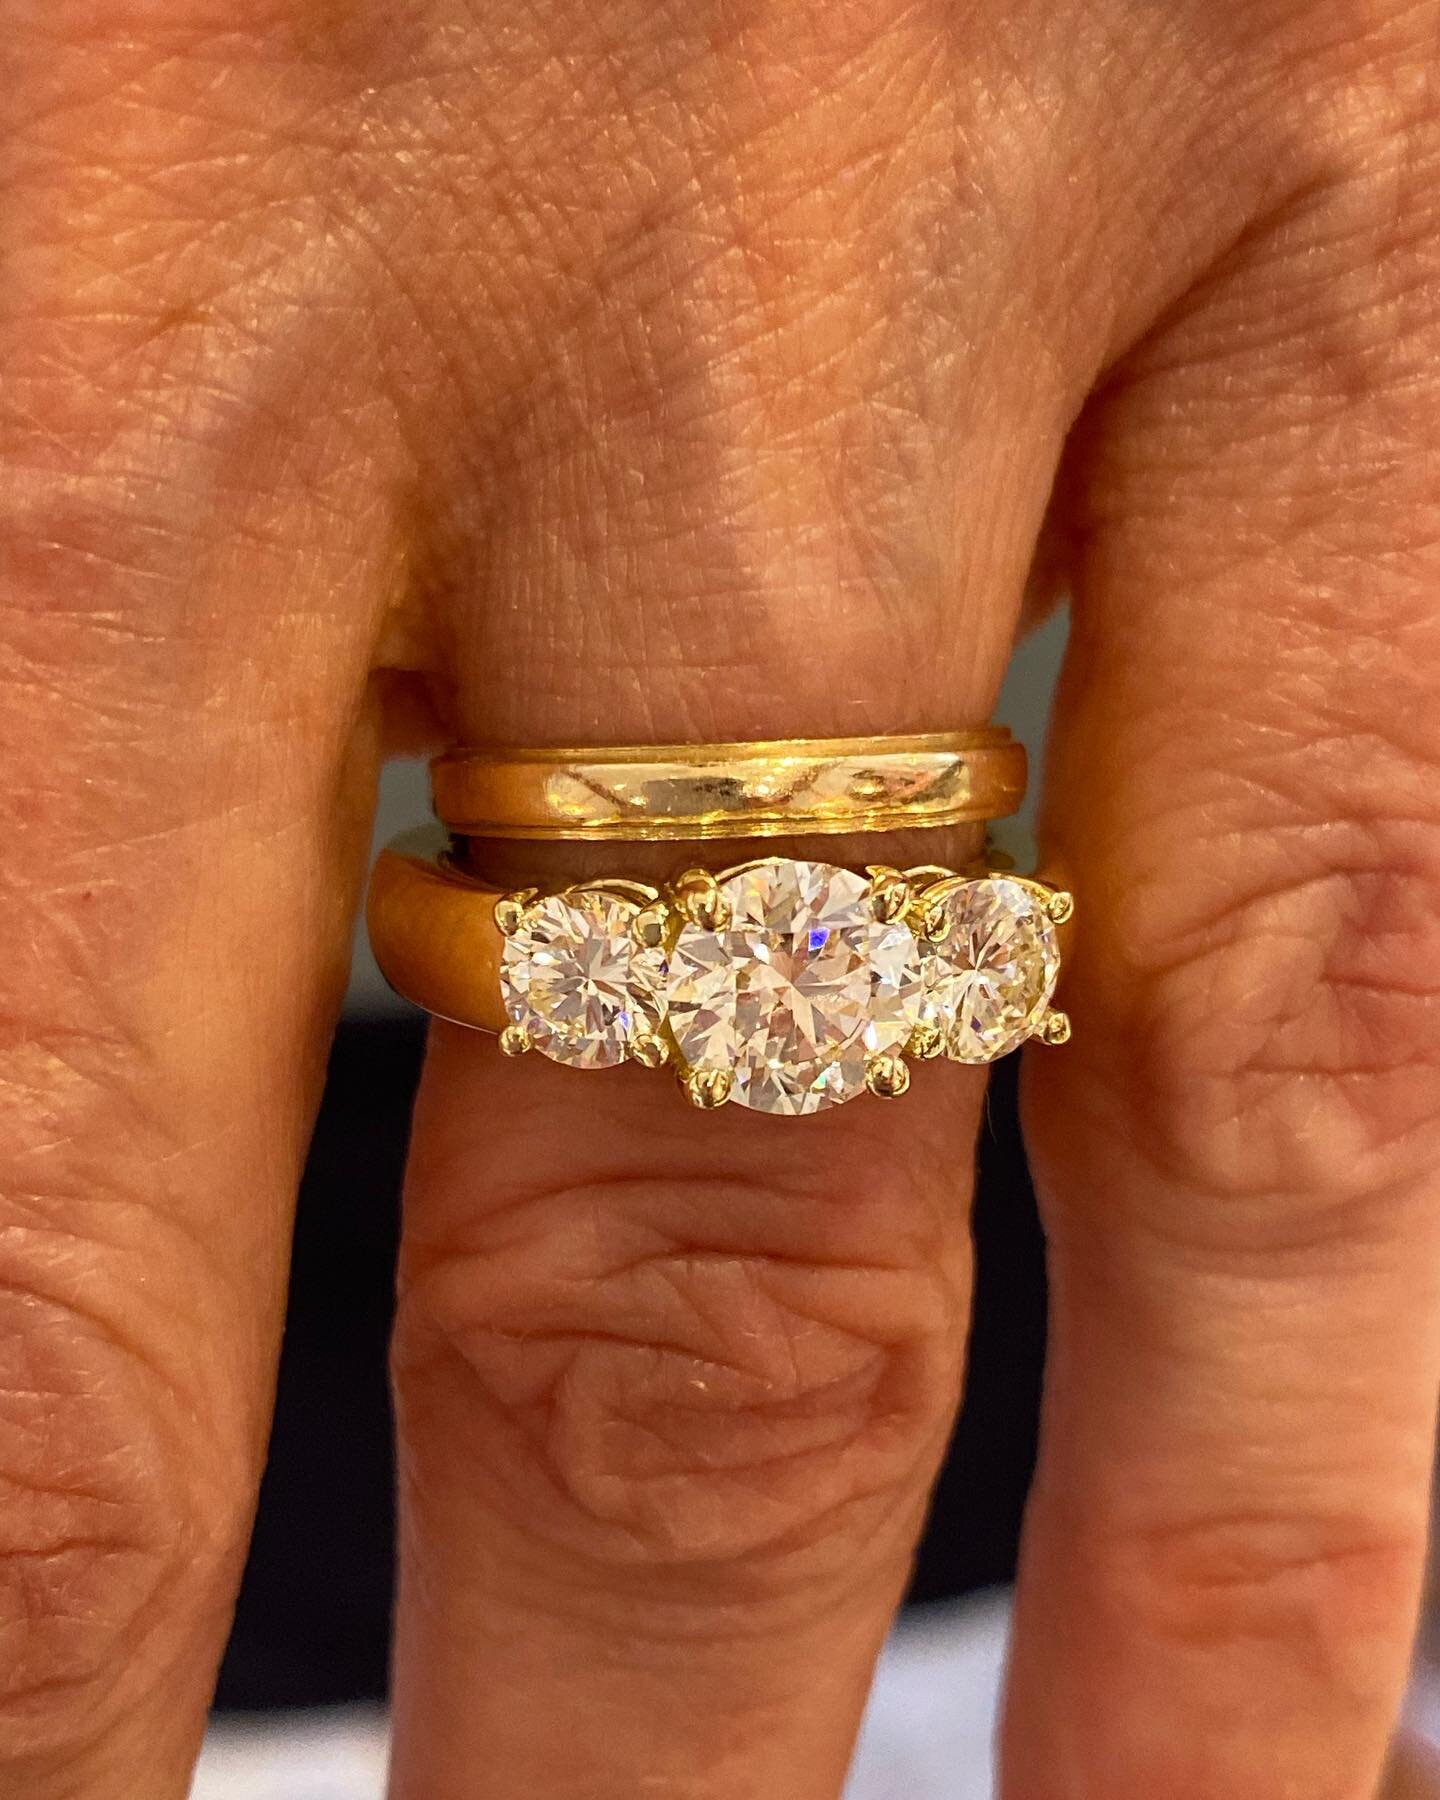 New eighteen karat yellow gold three stone diamond ring and 30 year old wedding band. Simply beautiful!
.
.
.
.
#theresecrowedesignltd #customjewelry #finejewelry #rings #threestonering #diamondsareagirlsbestfriend #diamonds #gold